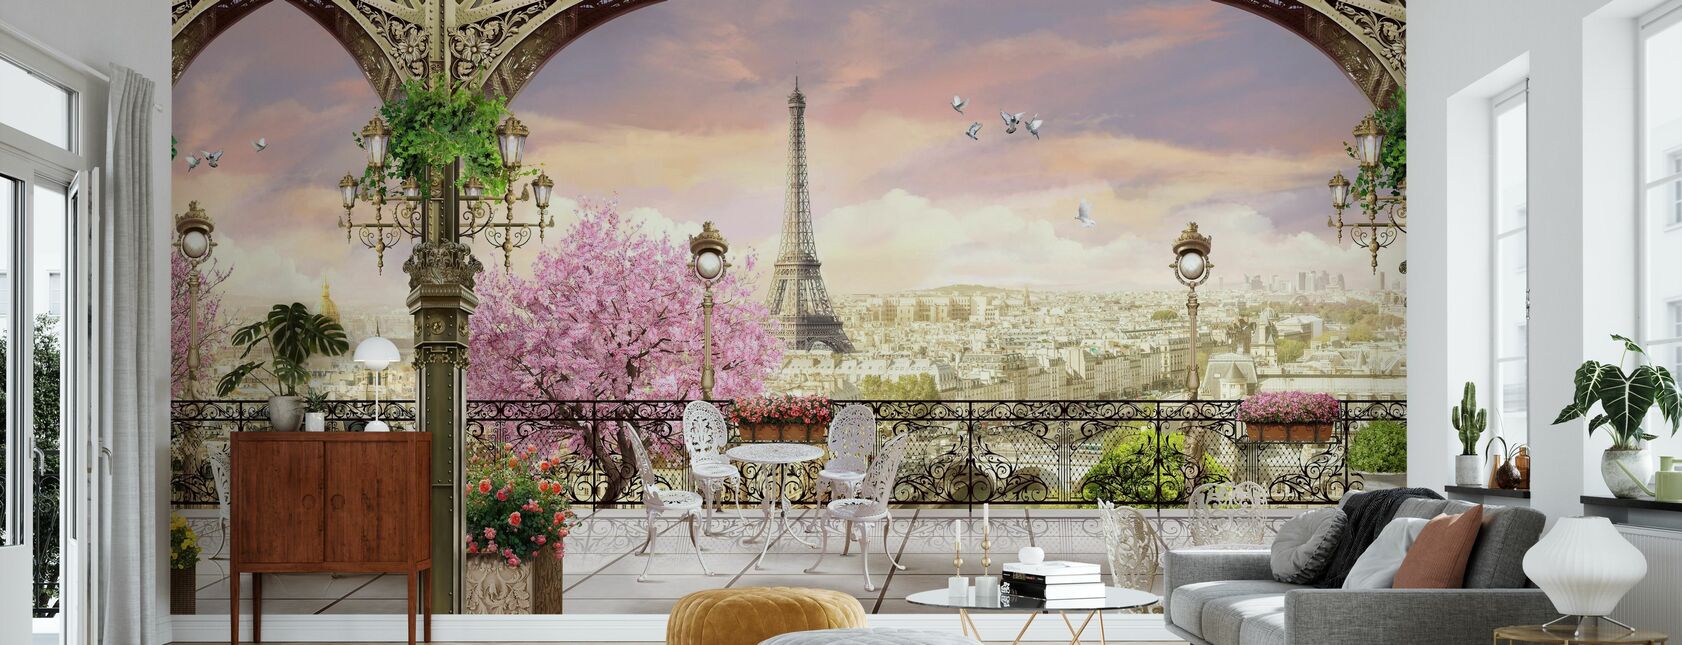 Paris Terrace - Wallpaper - Living Room